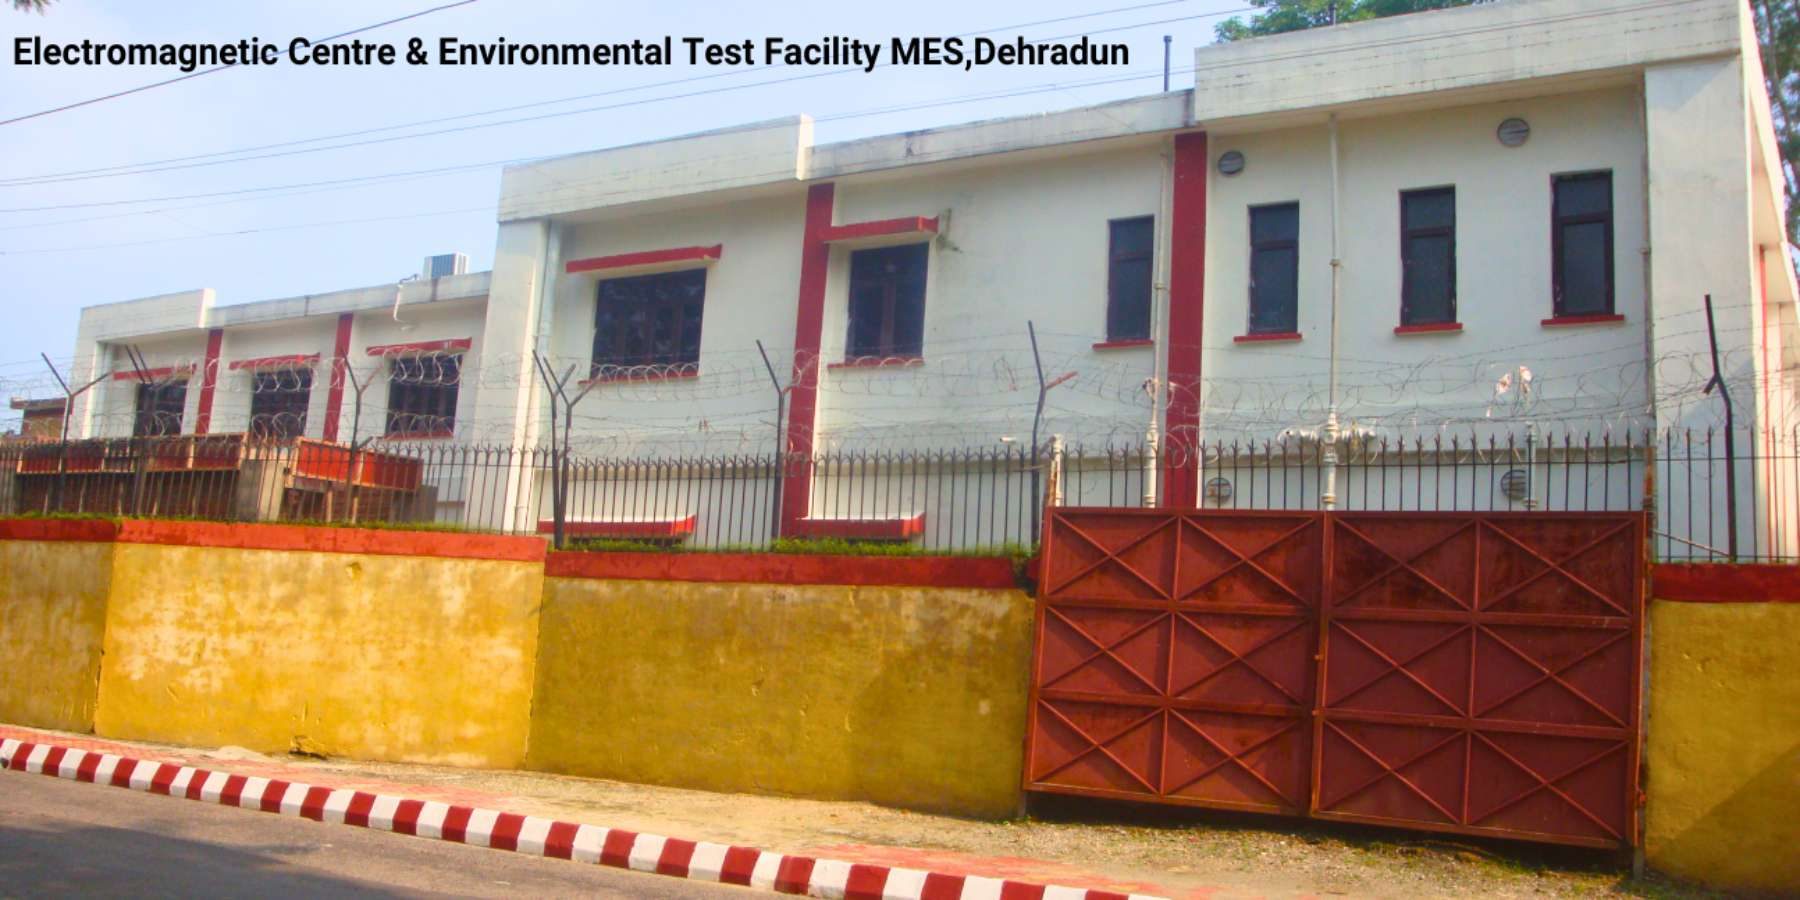 Electromagnetic Centre & Environmental Test Facility MES,Dehradun (1)